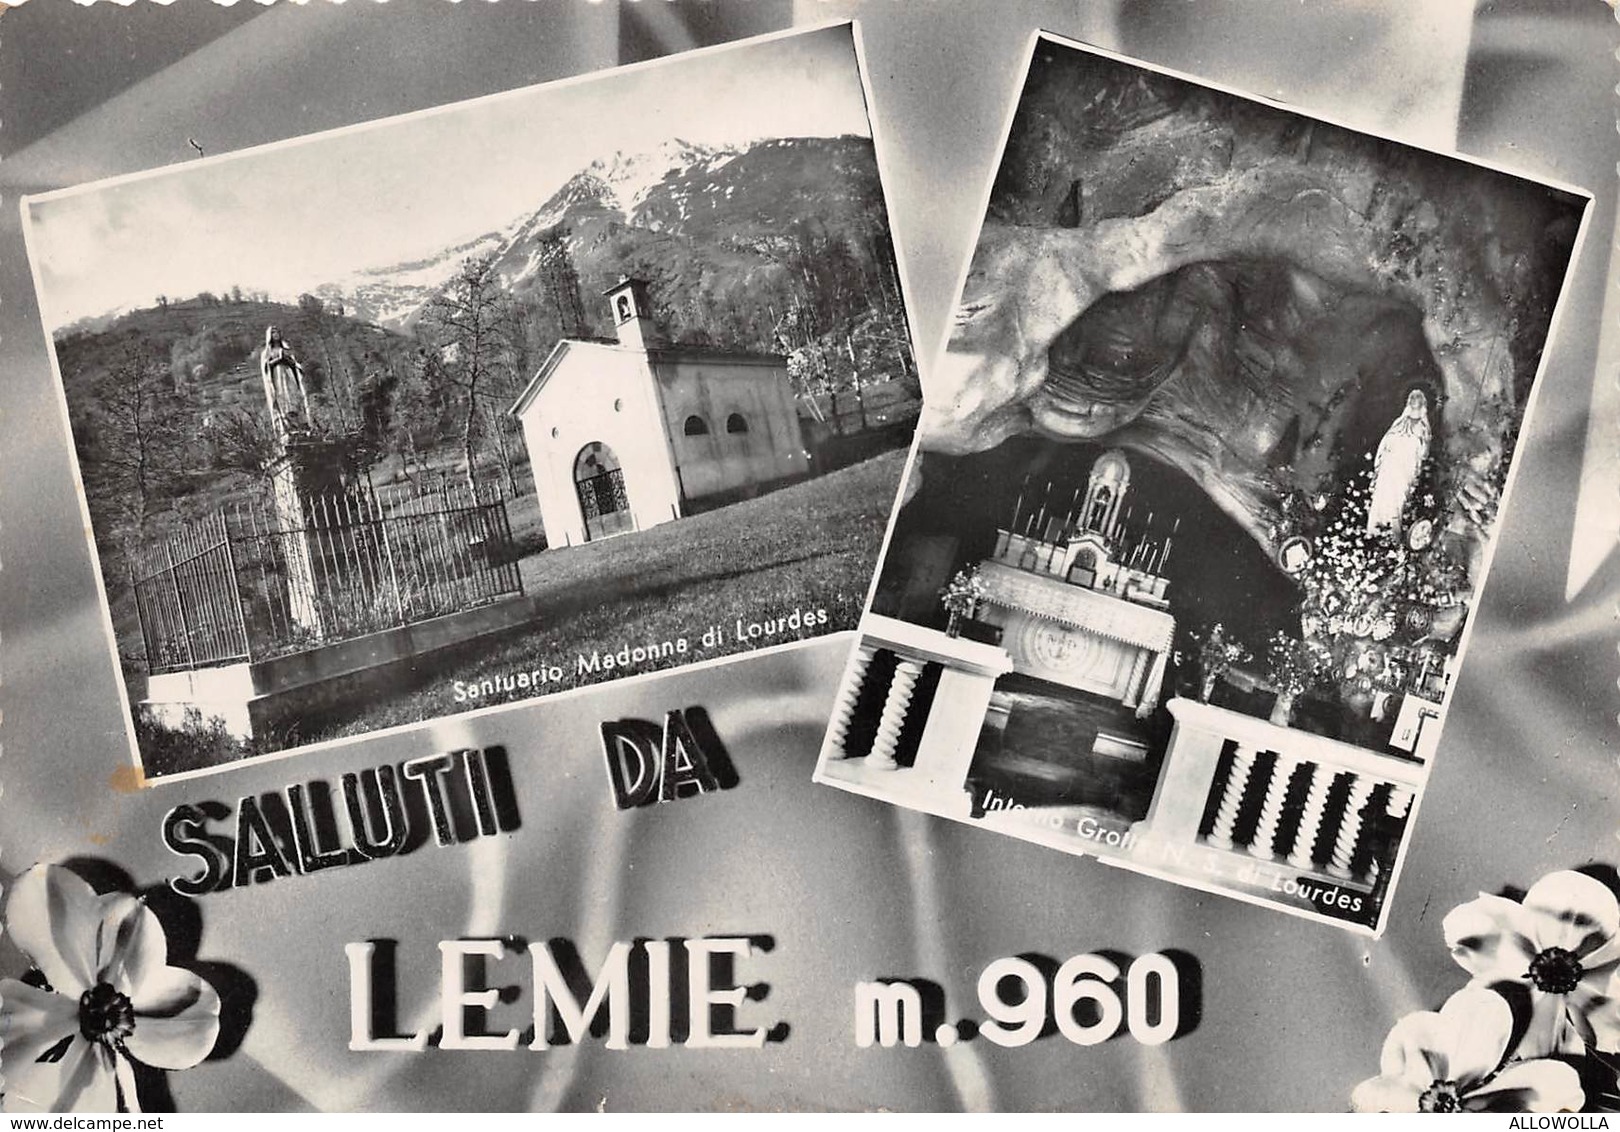 8129 "SALUTI DA LEMIE M.960" 2 VEDUTE-CARTOLINA POSTALE ORIG. SPED.1962 - Souvenir De...